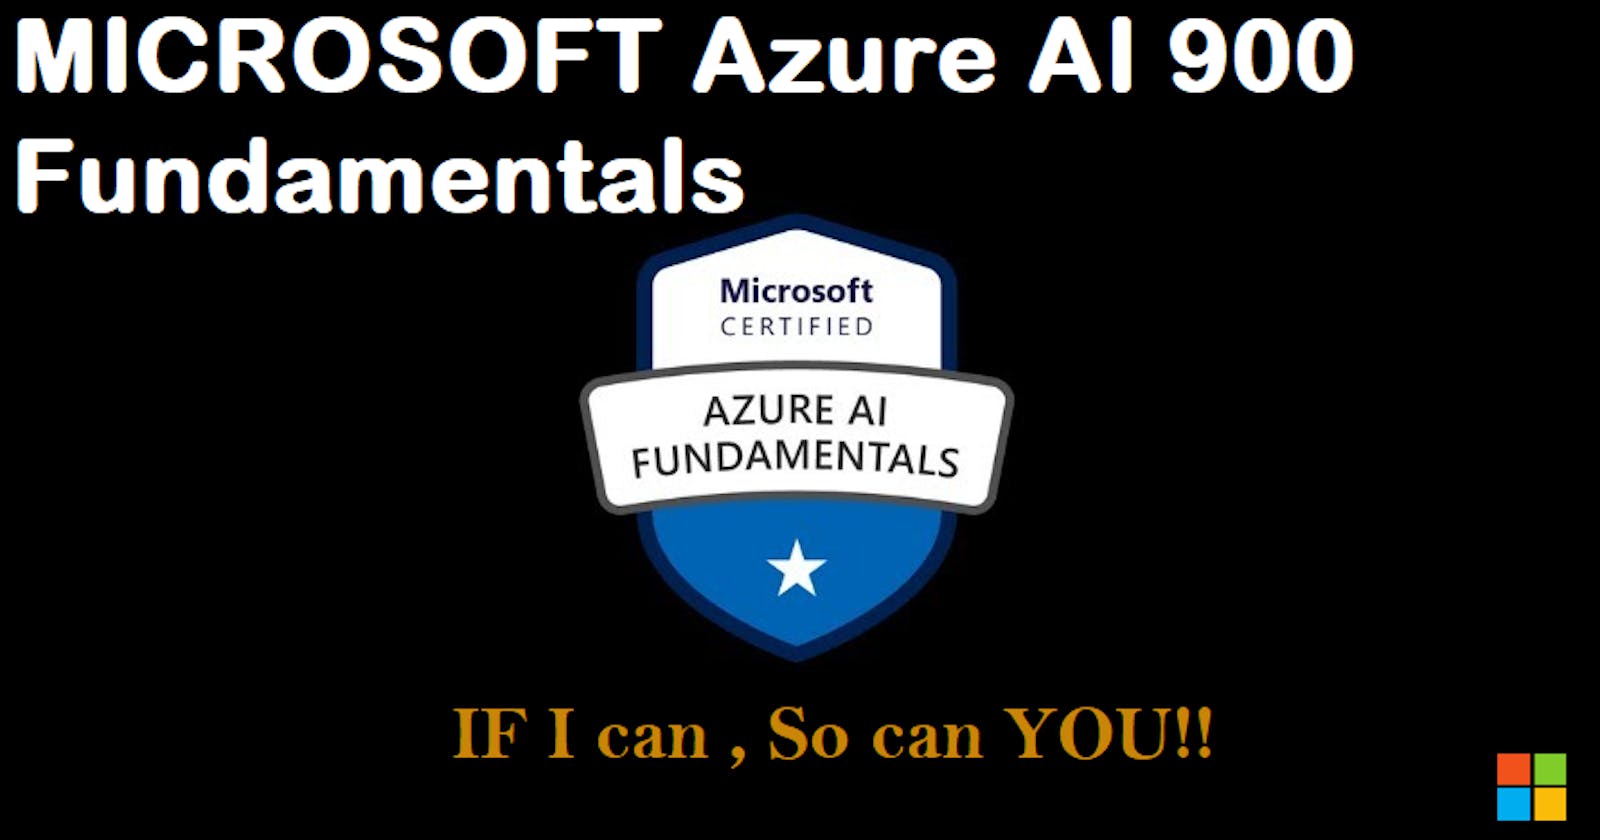 Microsoft Azure AI Fundamentals AI-900: How to Prepare and Pass the Exam